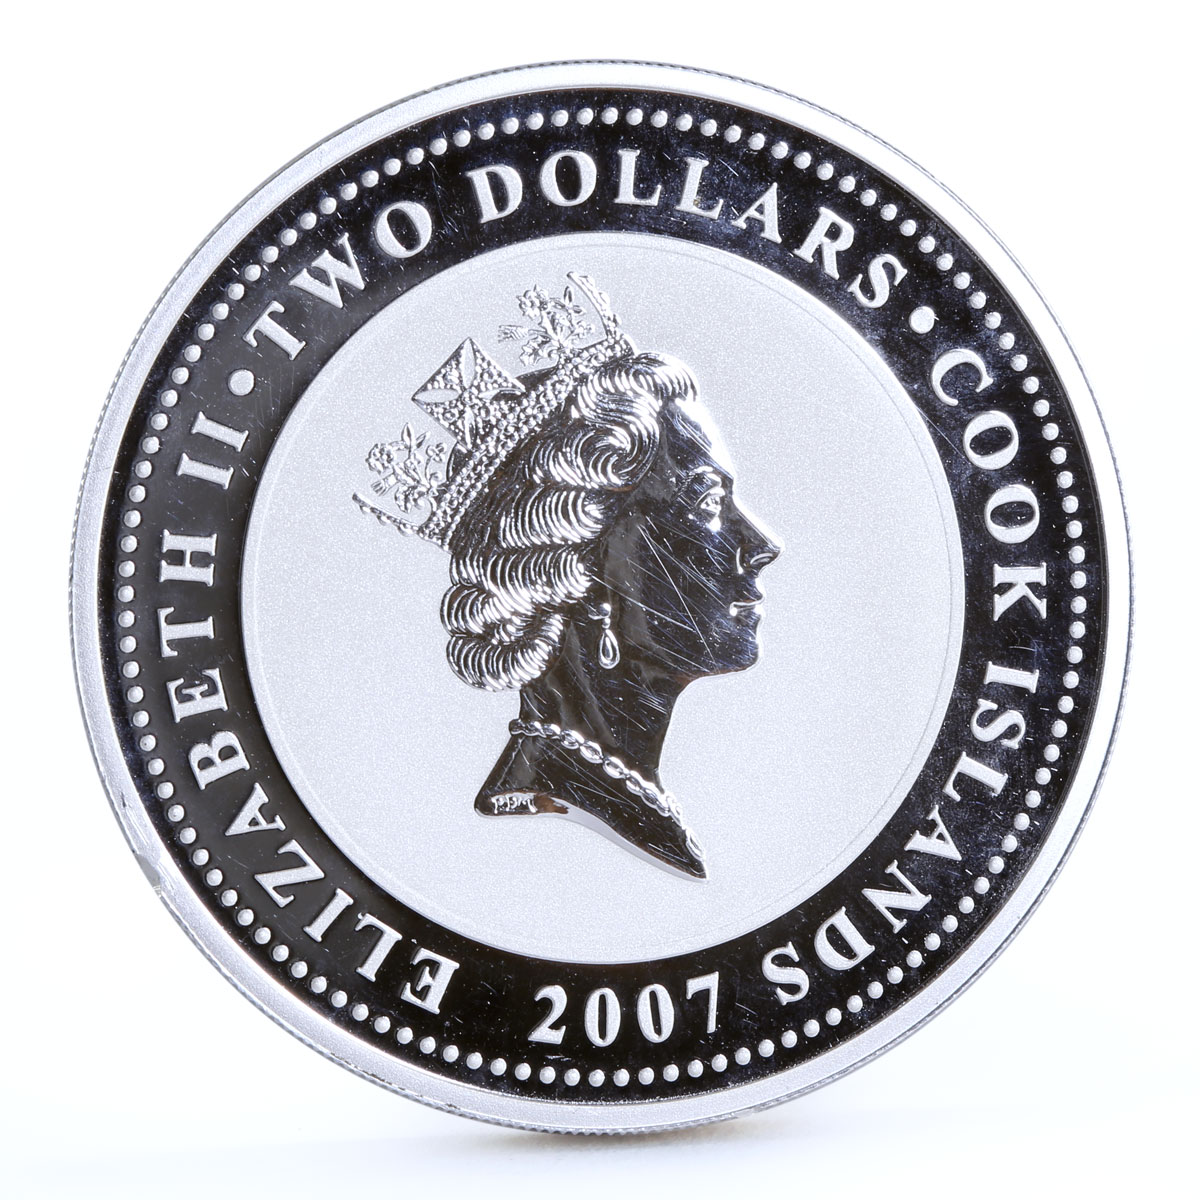 Cook Islands 2 dollars Literature Adventures of Sherlock Holmes silver coin 2007